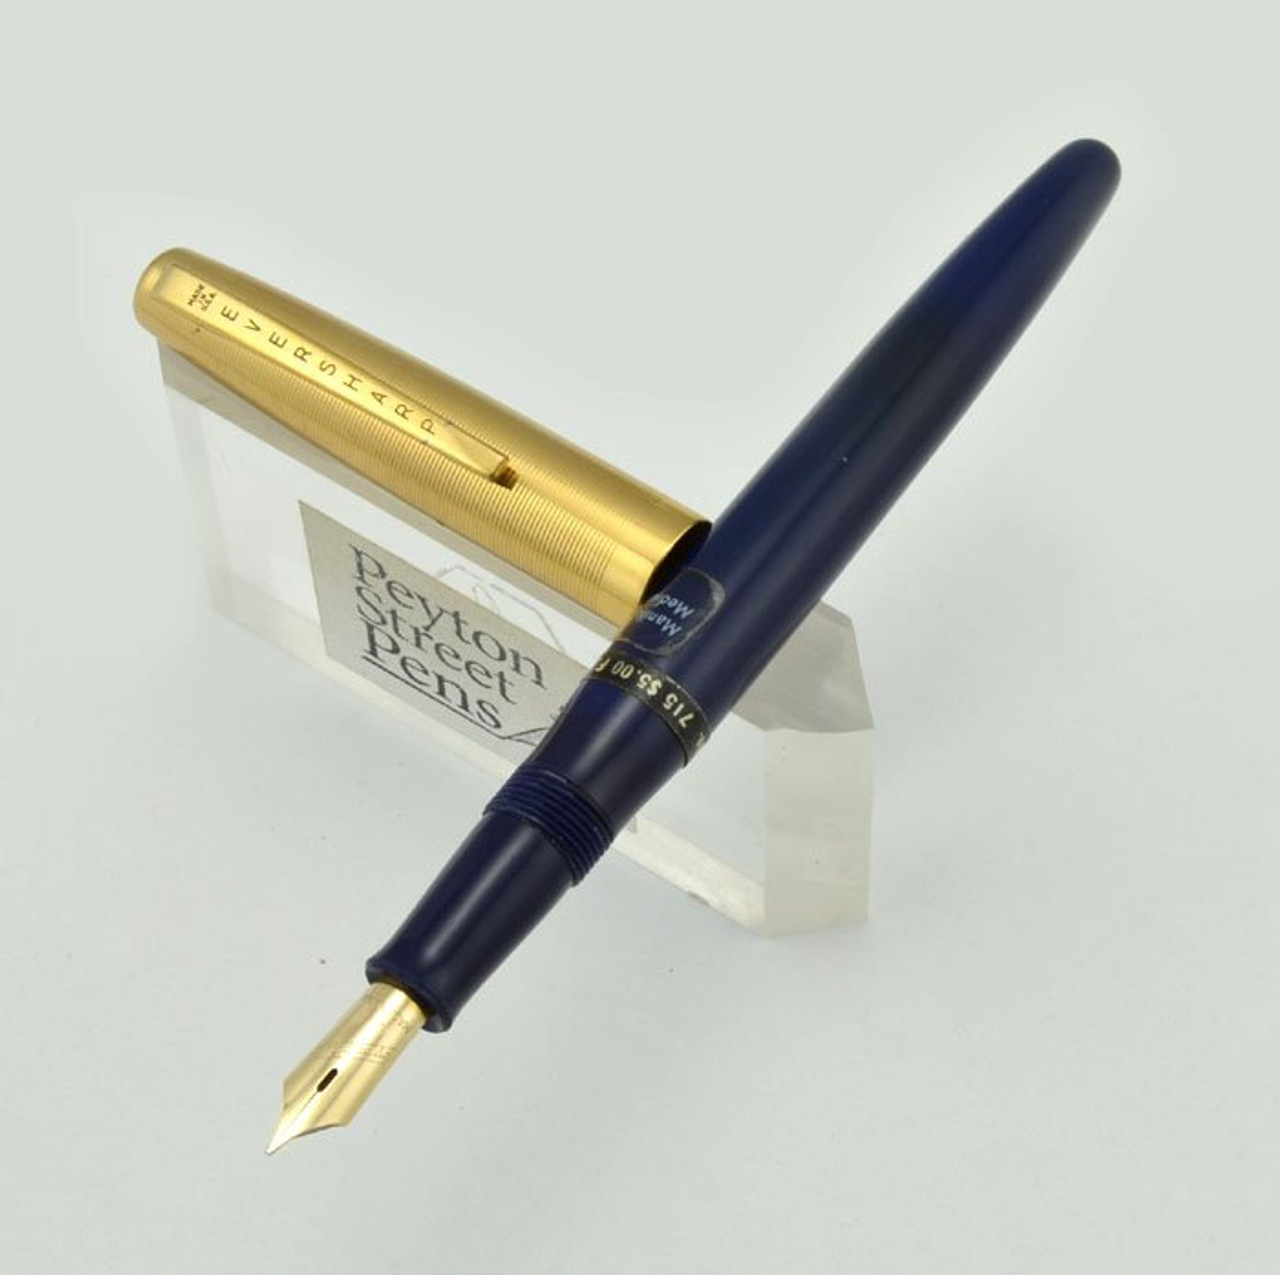 Eversharp 715 Fountain Pen - 1950s, Gold Cap & Blue Barrel, Manifold Medium 14k Nib (Near Mint, Stickered, Restored)